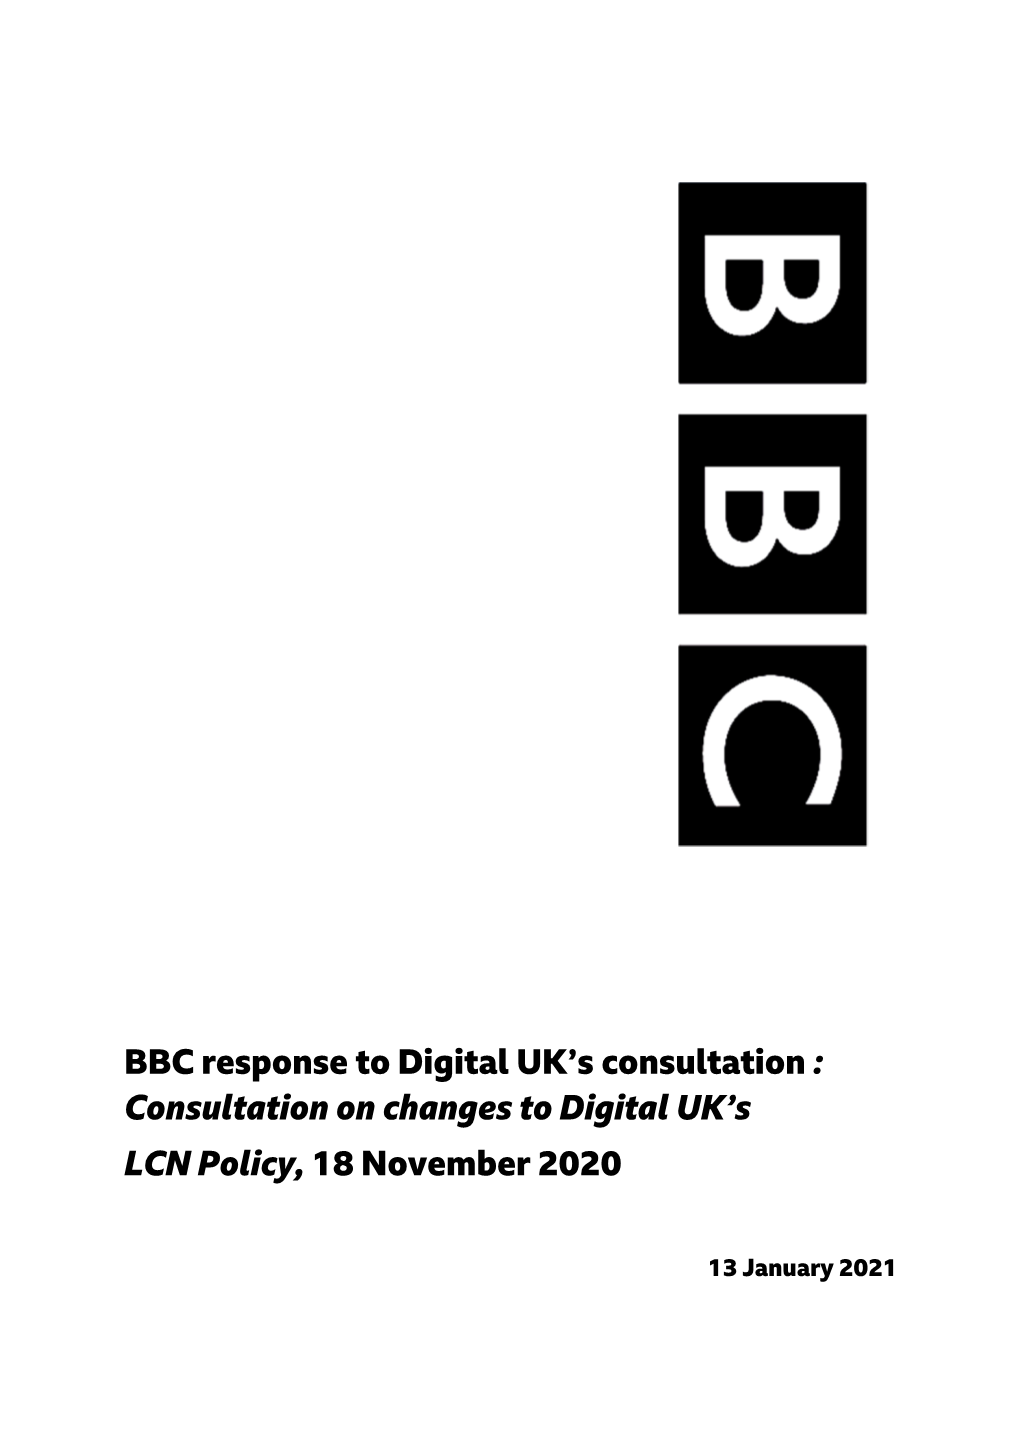 BBC Response to Digital UK's Consultation